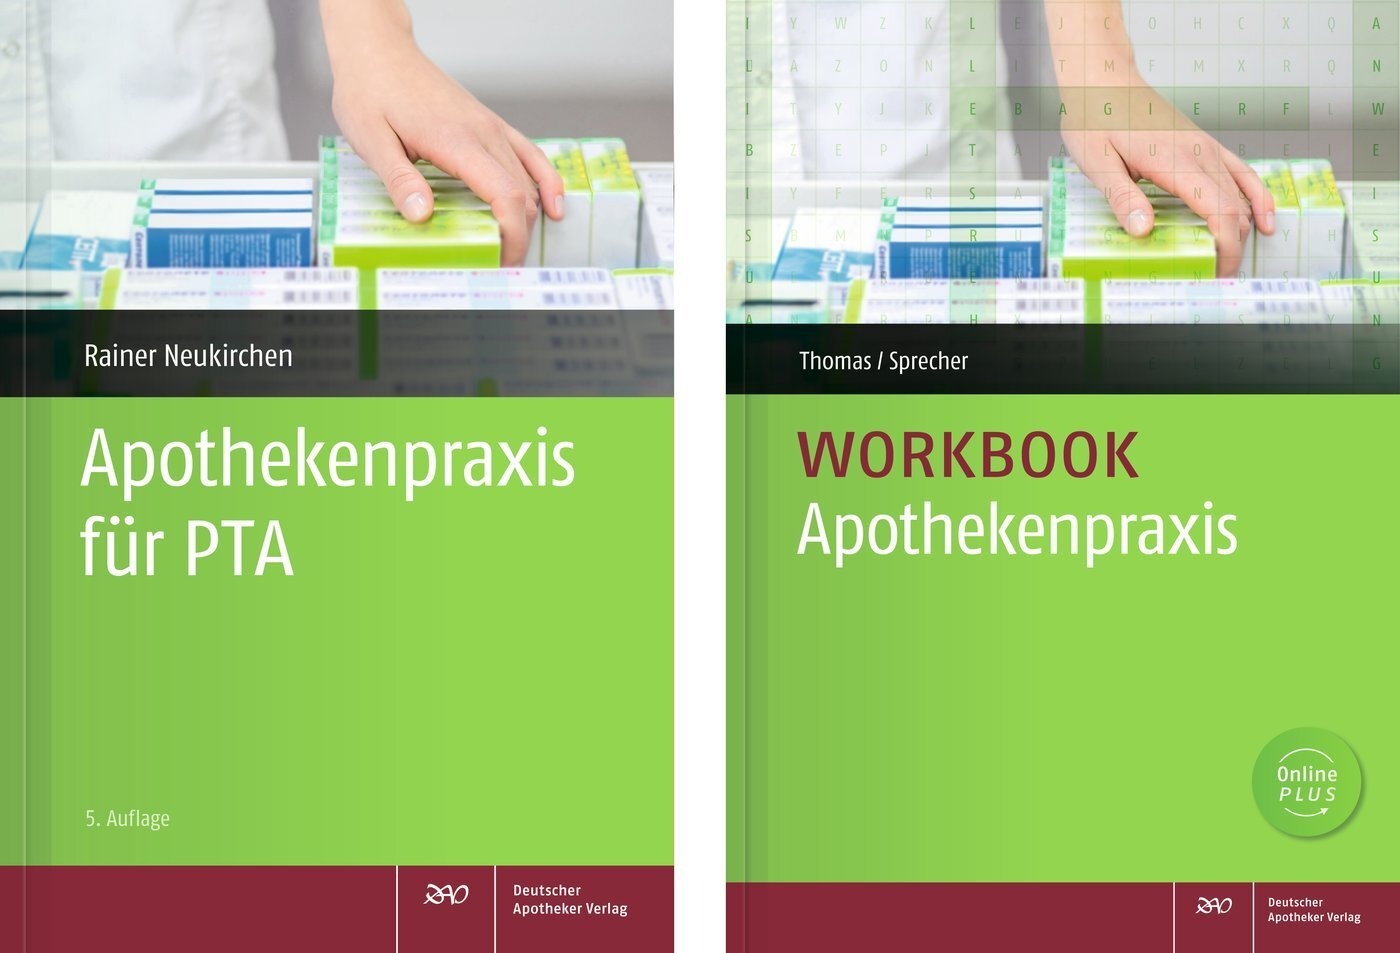 Apothekenpraxis-Workbook Mit Apothekenpraxis Für Pta  Workbook Apothekenpraxis - Rainer Neukirchen  Holger Herold  Wolfgang Kircher  Annegret Lehmann